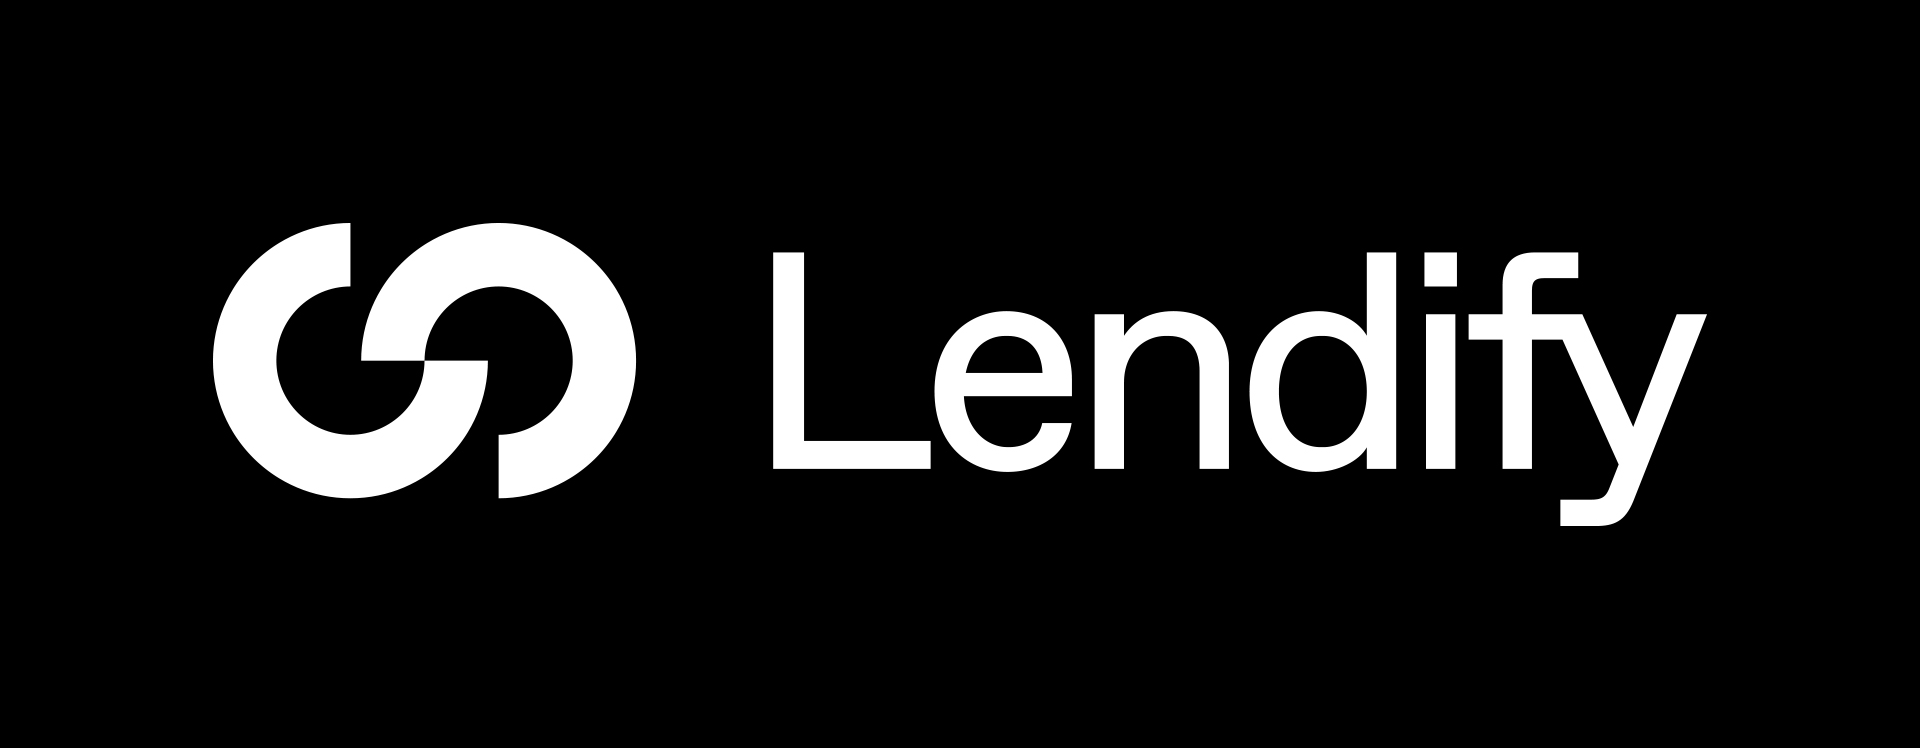 New Logo and Identity for Lendify by Essen International